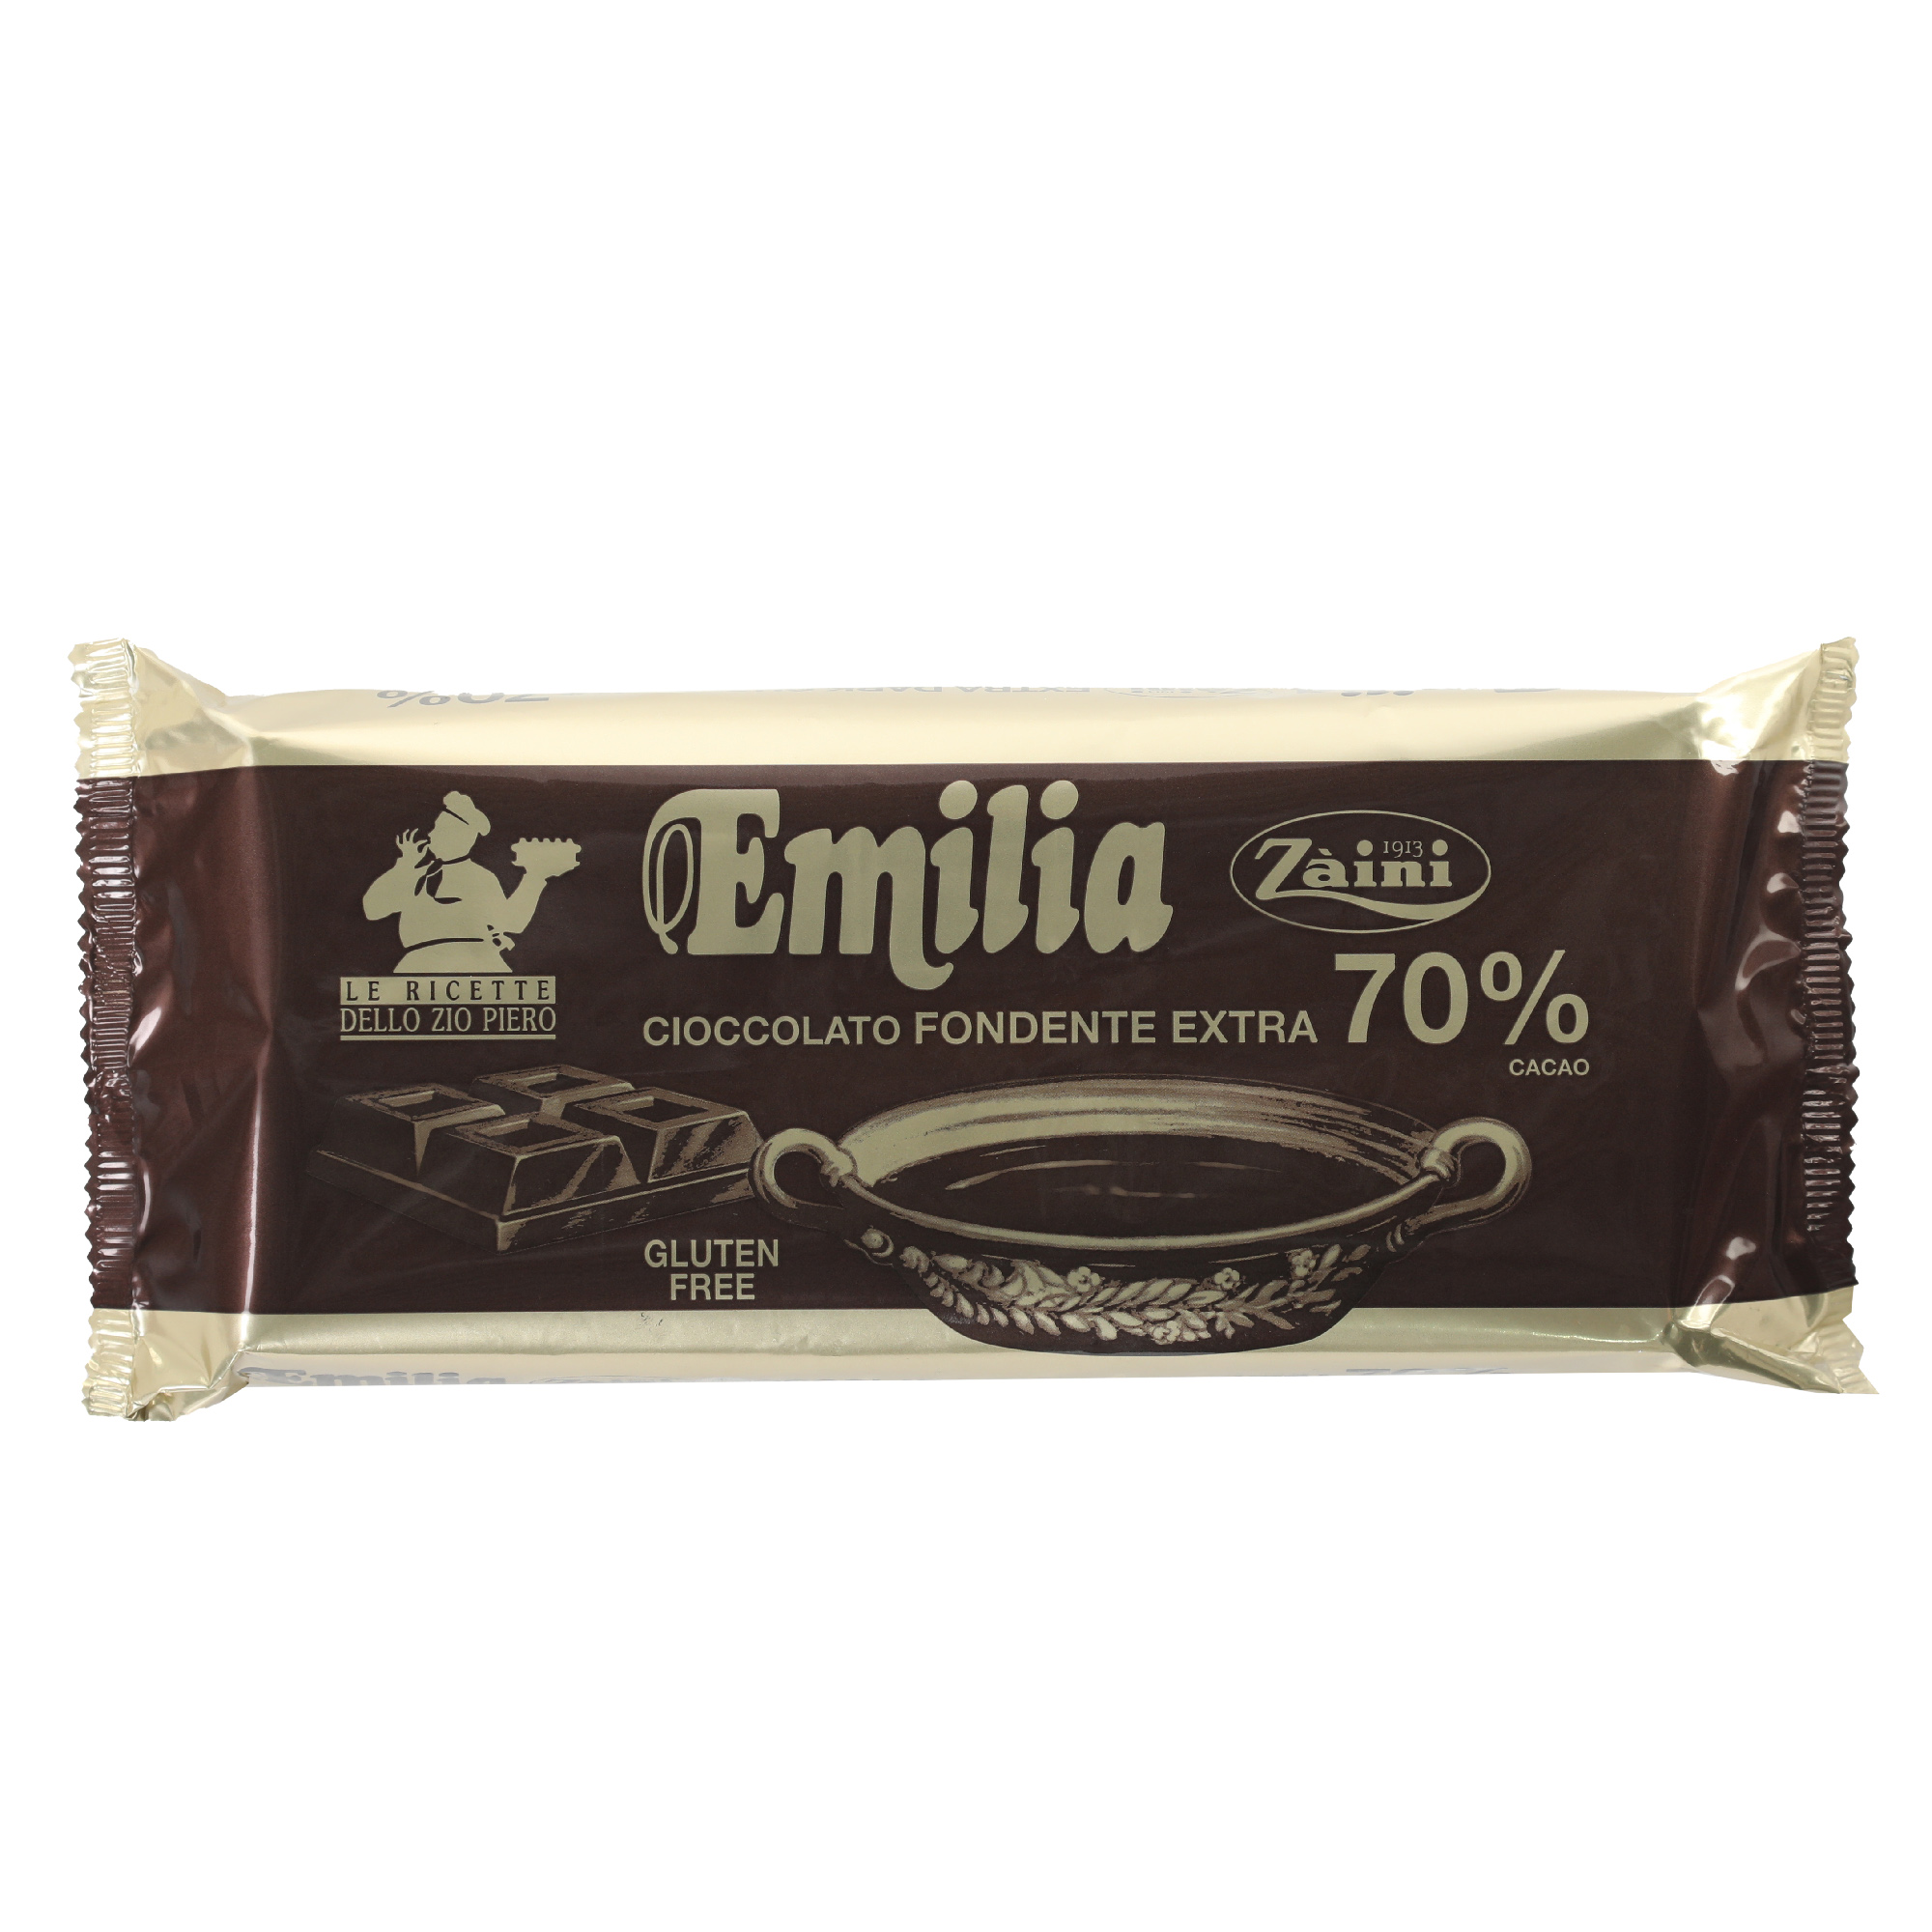 Шоколад темный 70% Zaini Emilia, 1000 г шоколад темный 70% zaini emilia 200 г